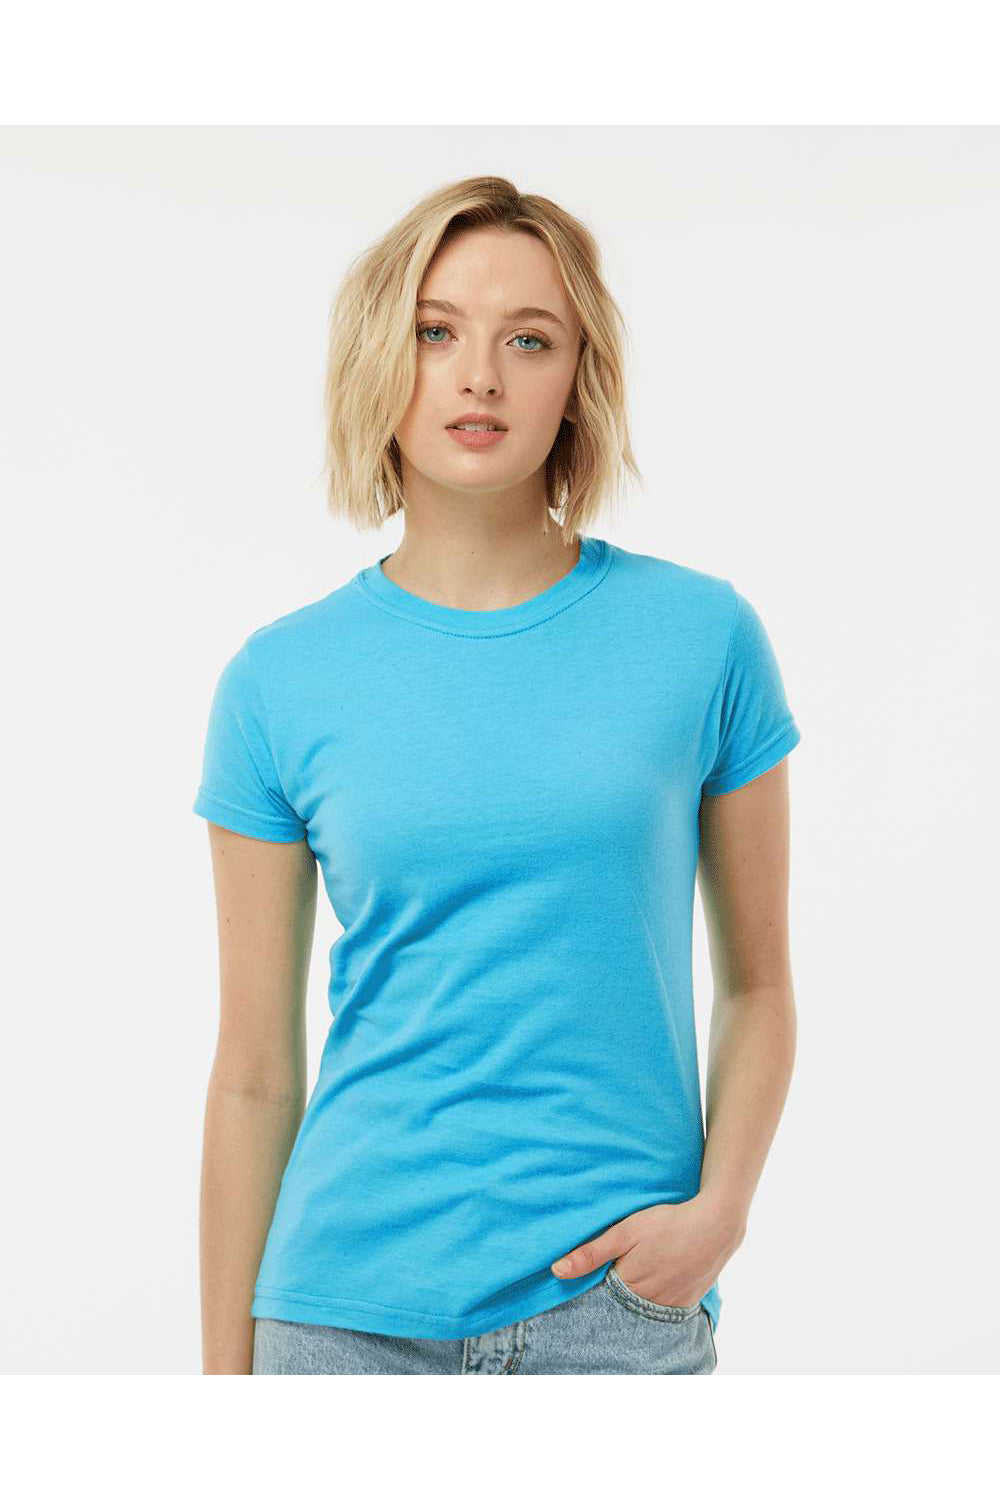 Tultex 213 Womens Fine Jersey Slim Fit Short Sleeve Crewneck T-Shirt Aqua Blue Model Front